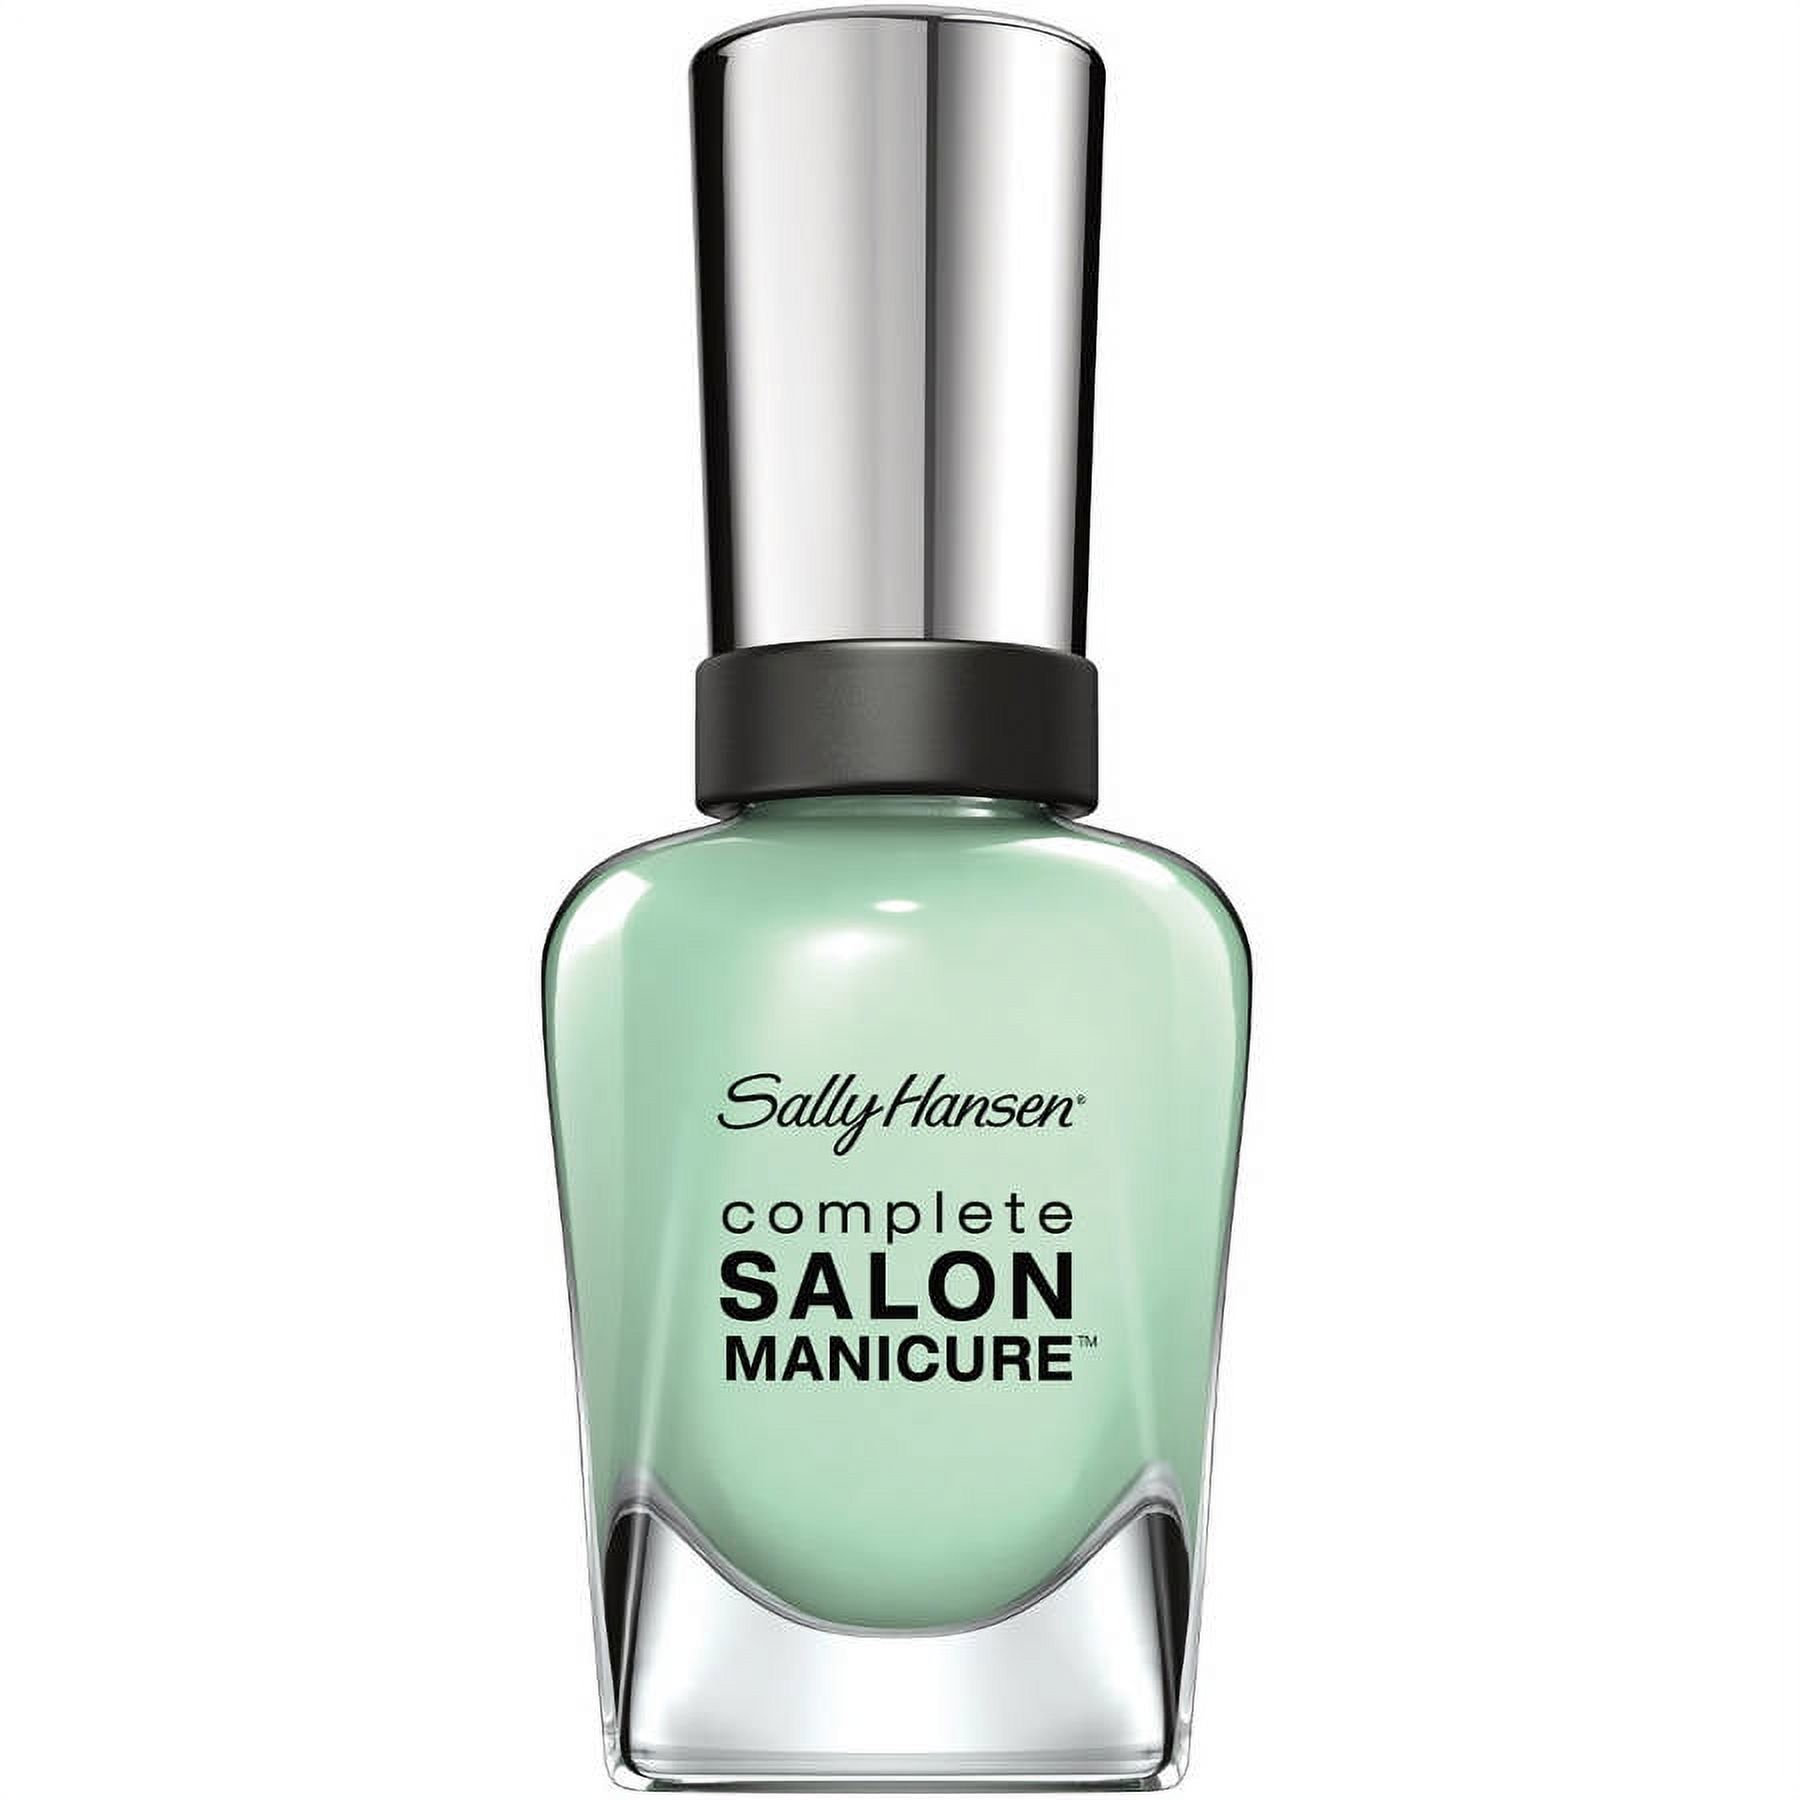 Sally Hansen Complete Salon Manicure Nail Polish, Pardon My Garden - image 1 of 4